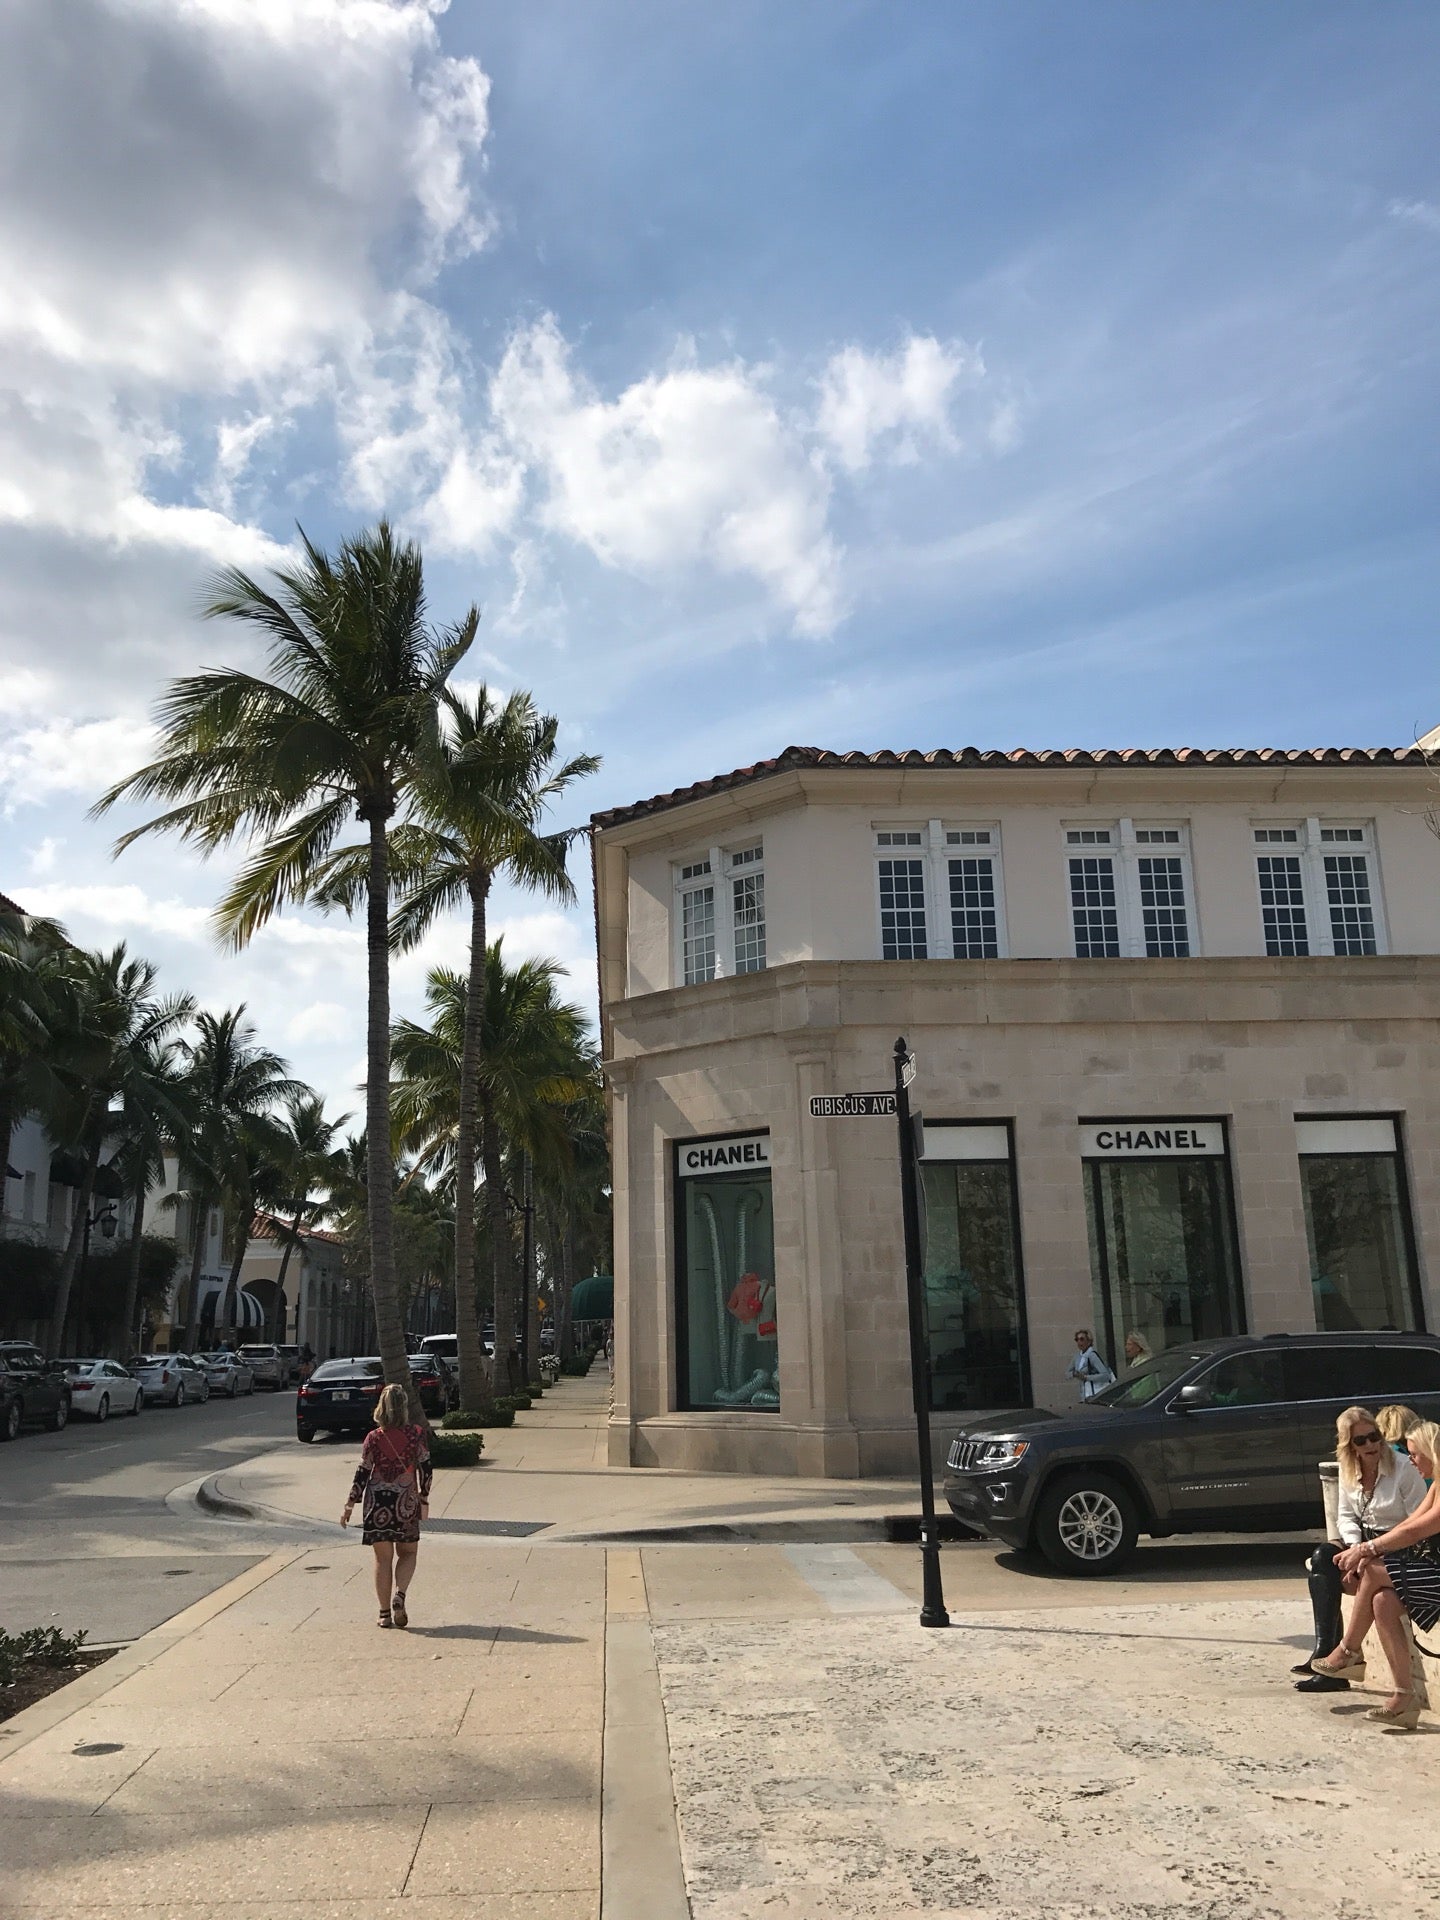 Florida - Palm Beach - Worth Avenue and Hibiscus Avenue